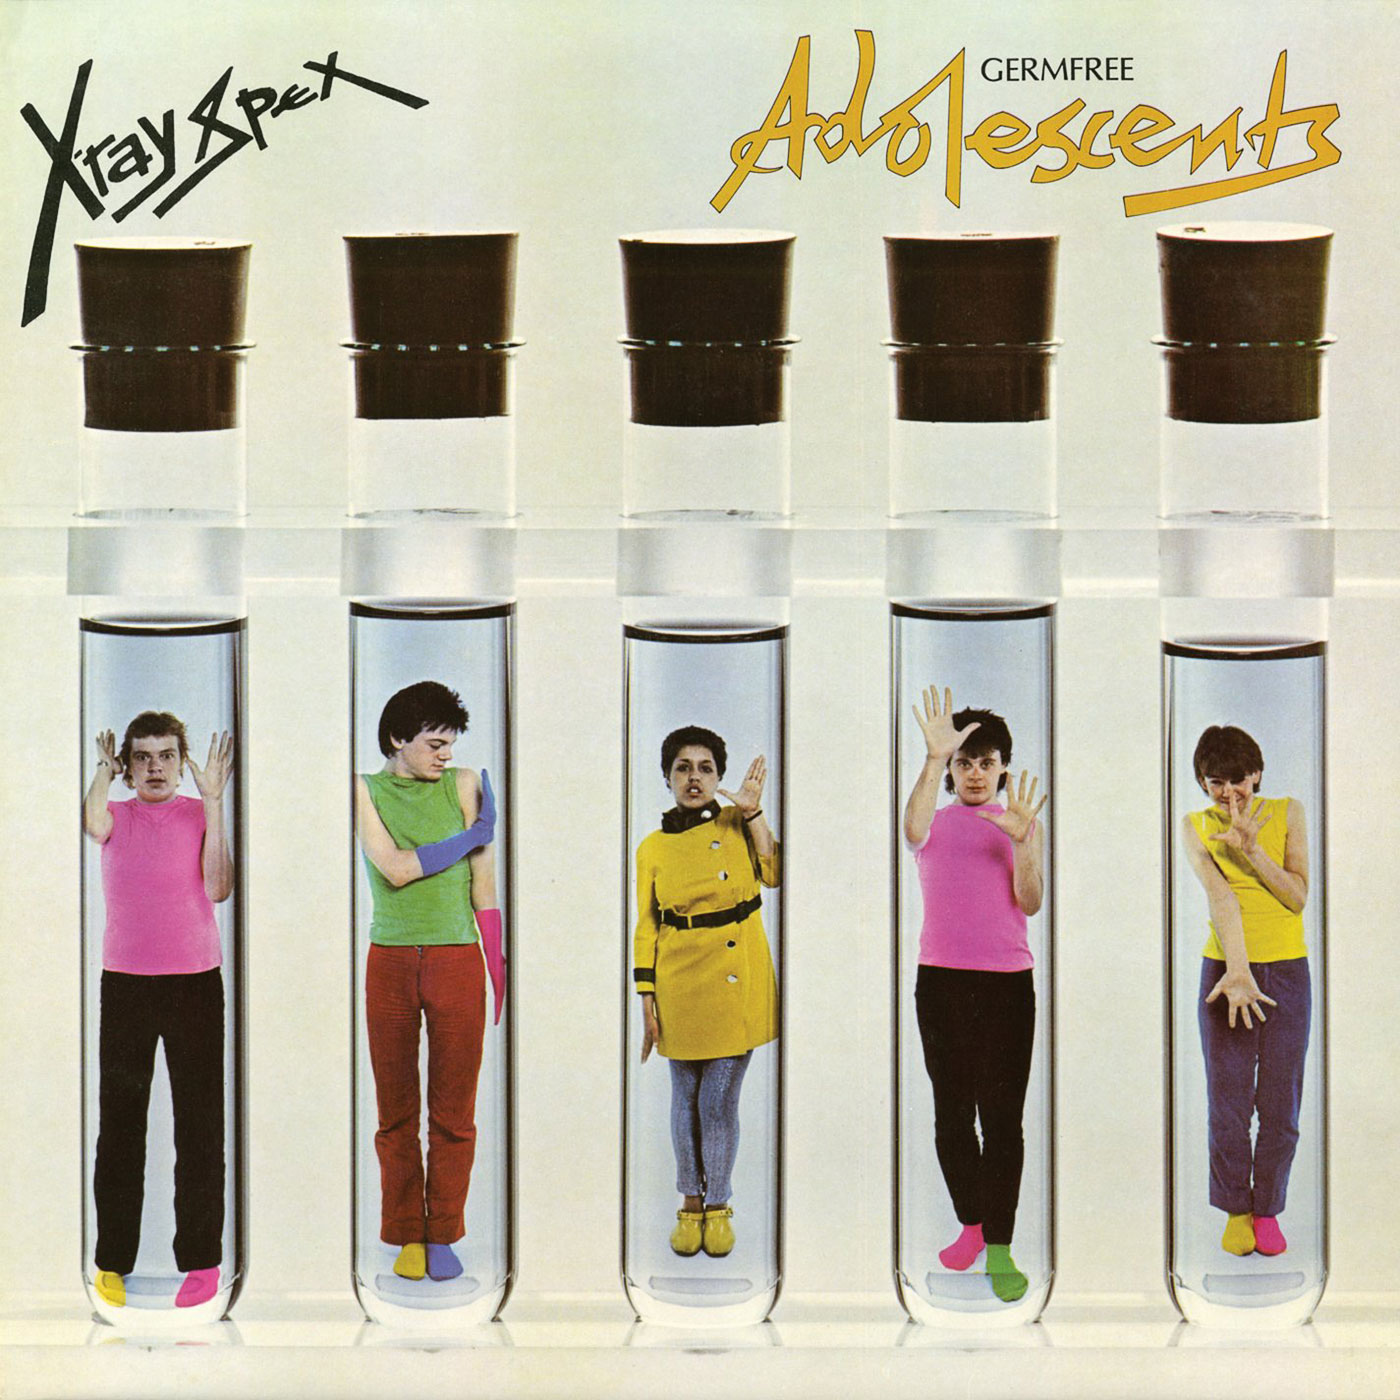 424 X-Ray Spex – Germ-Free Adolescents